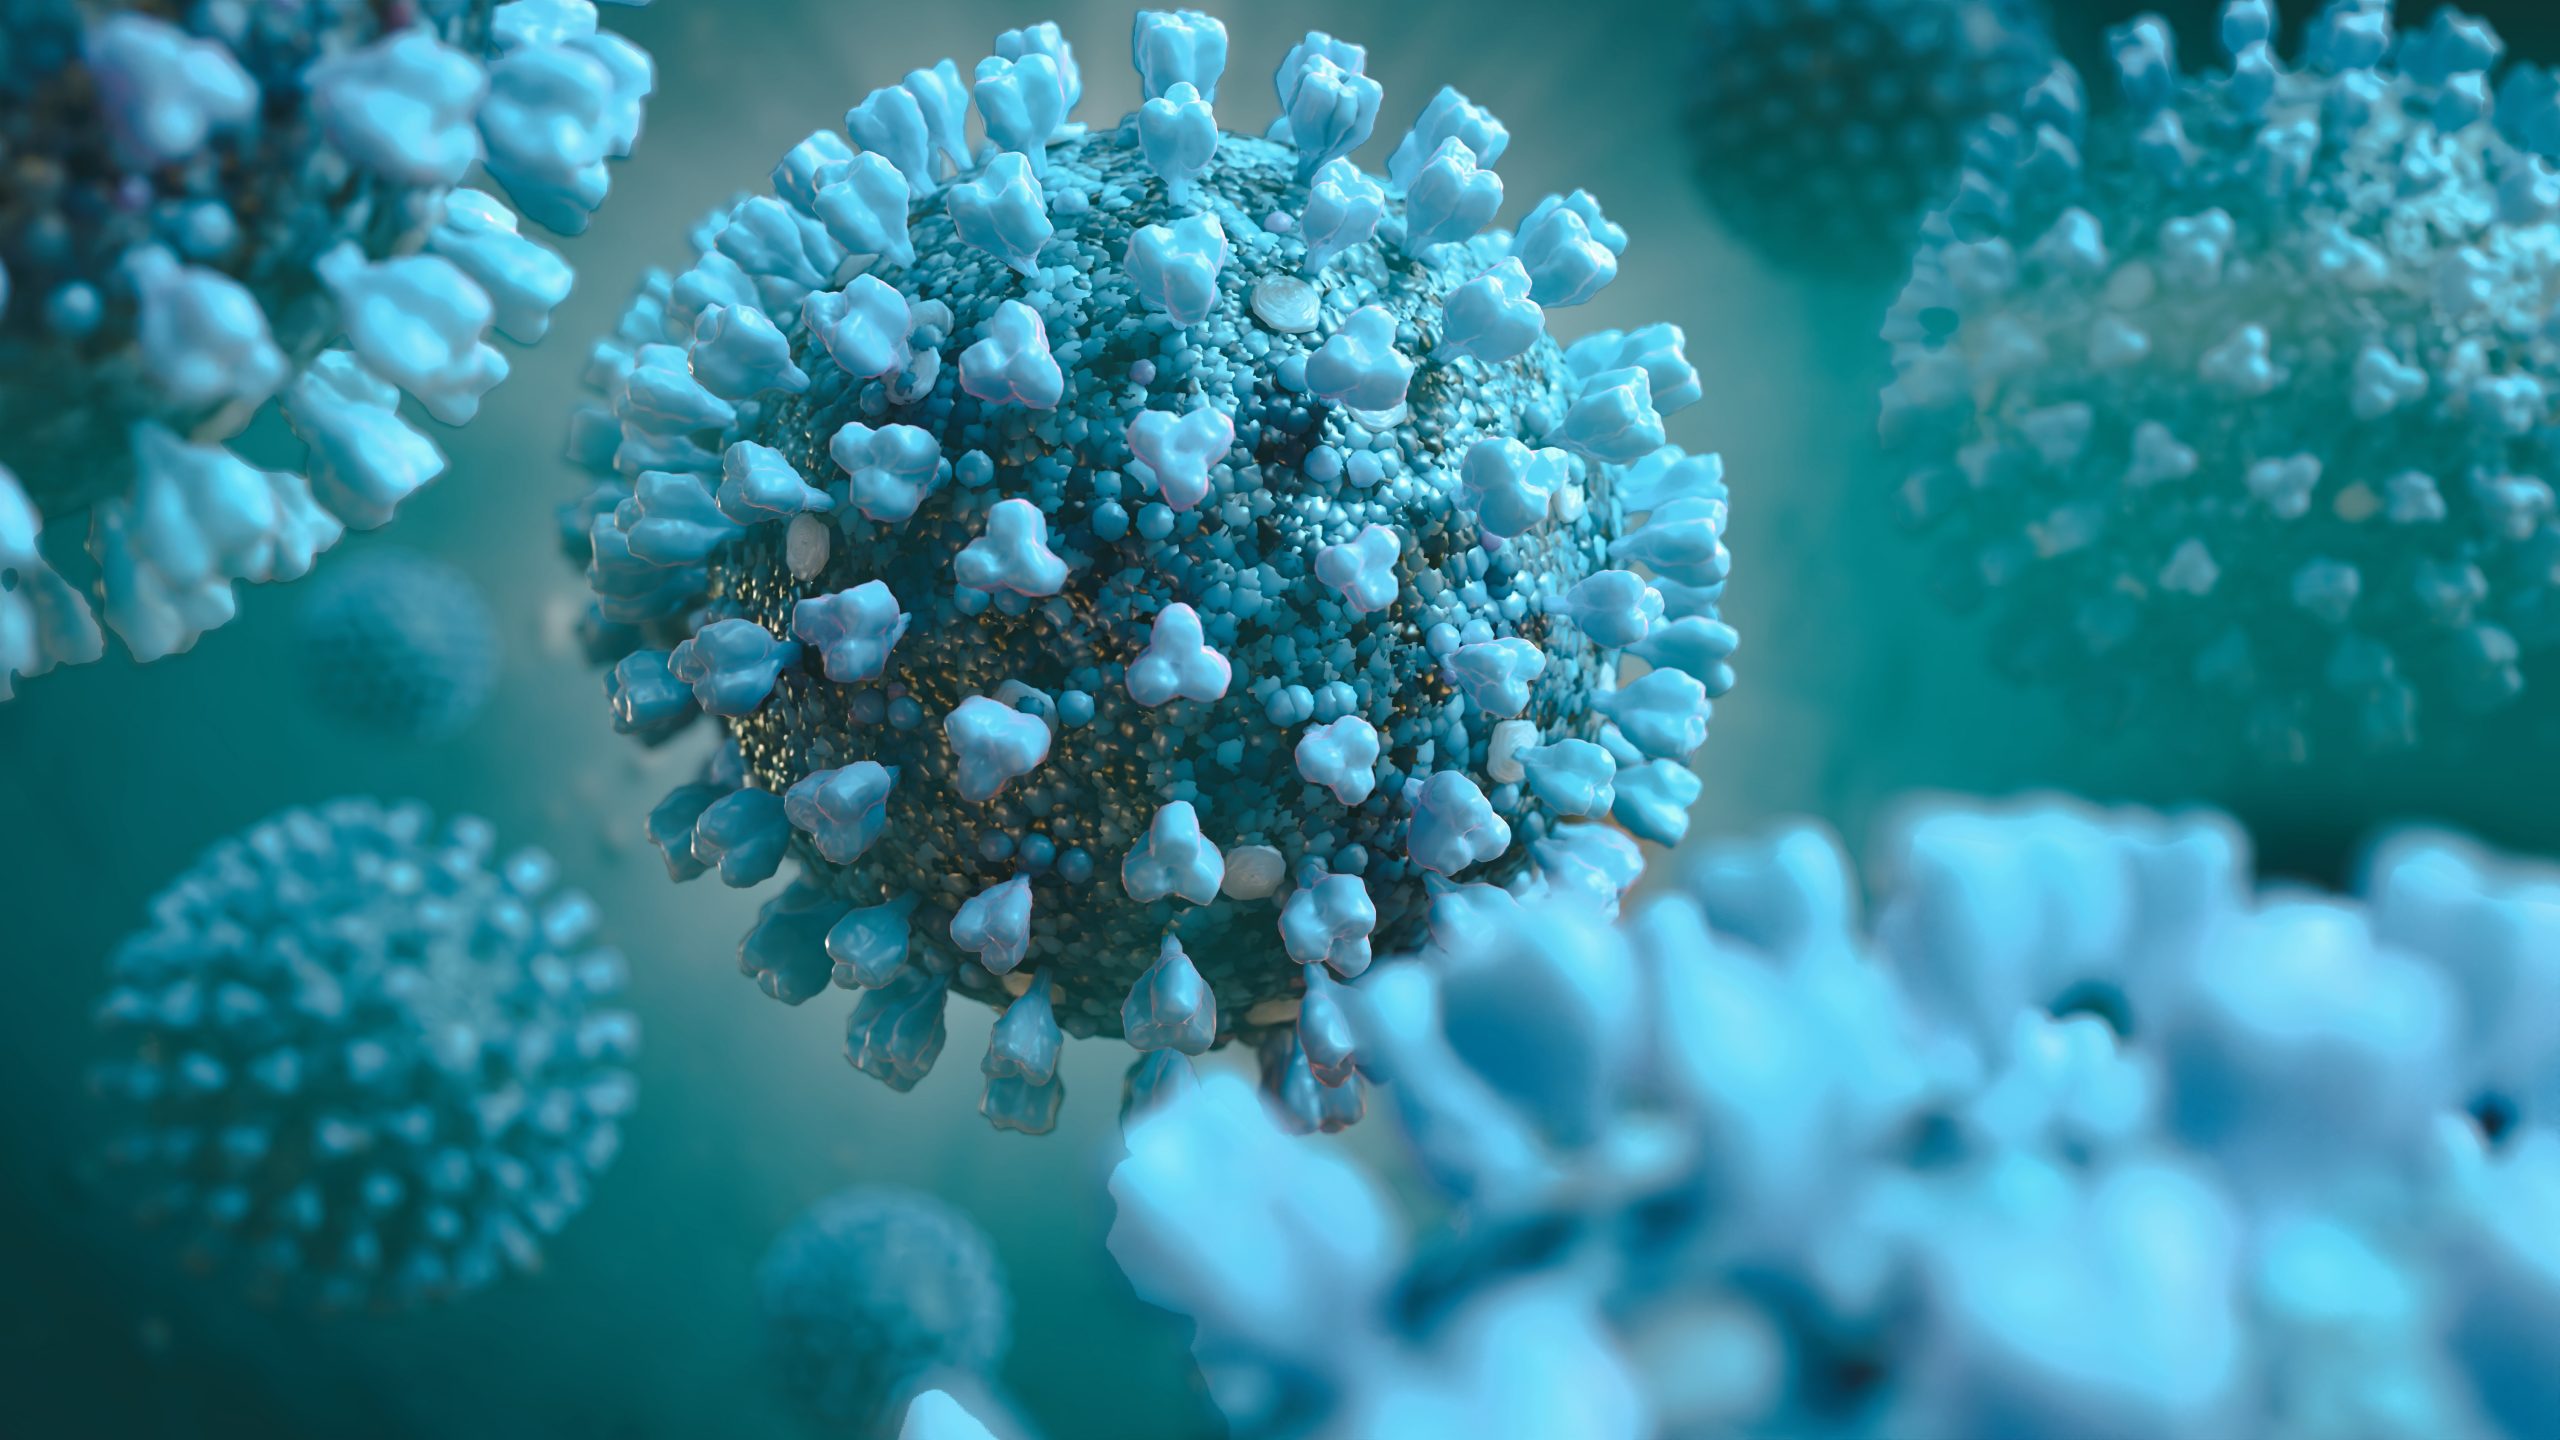 contagious coronavirus pandemic, dangerous virus outbreak; blog: coronavirus update from healthpark pediatrics